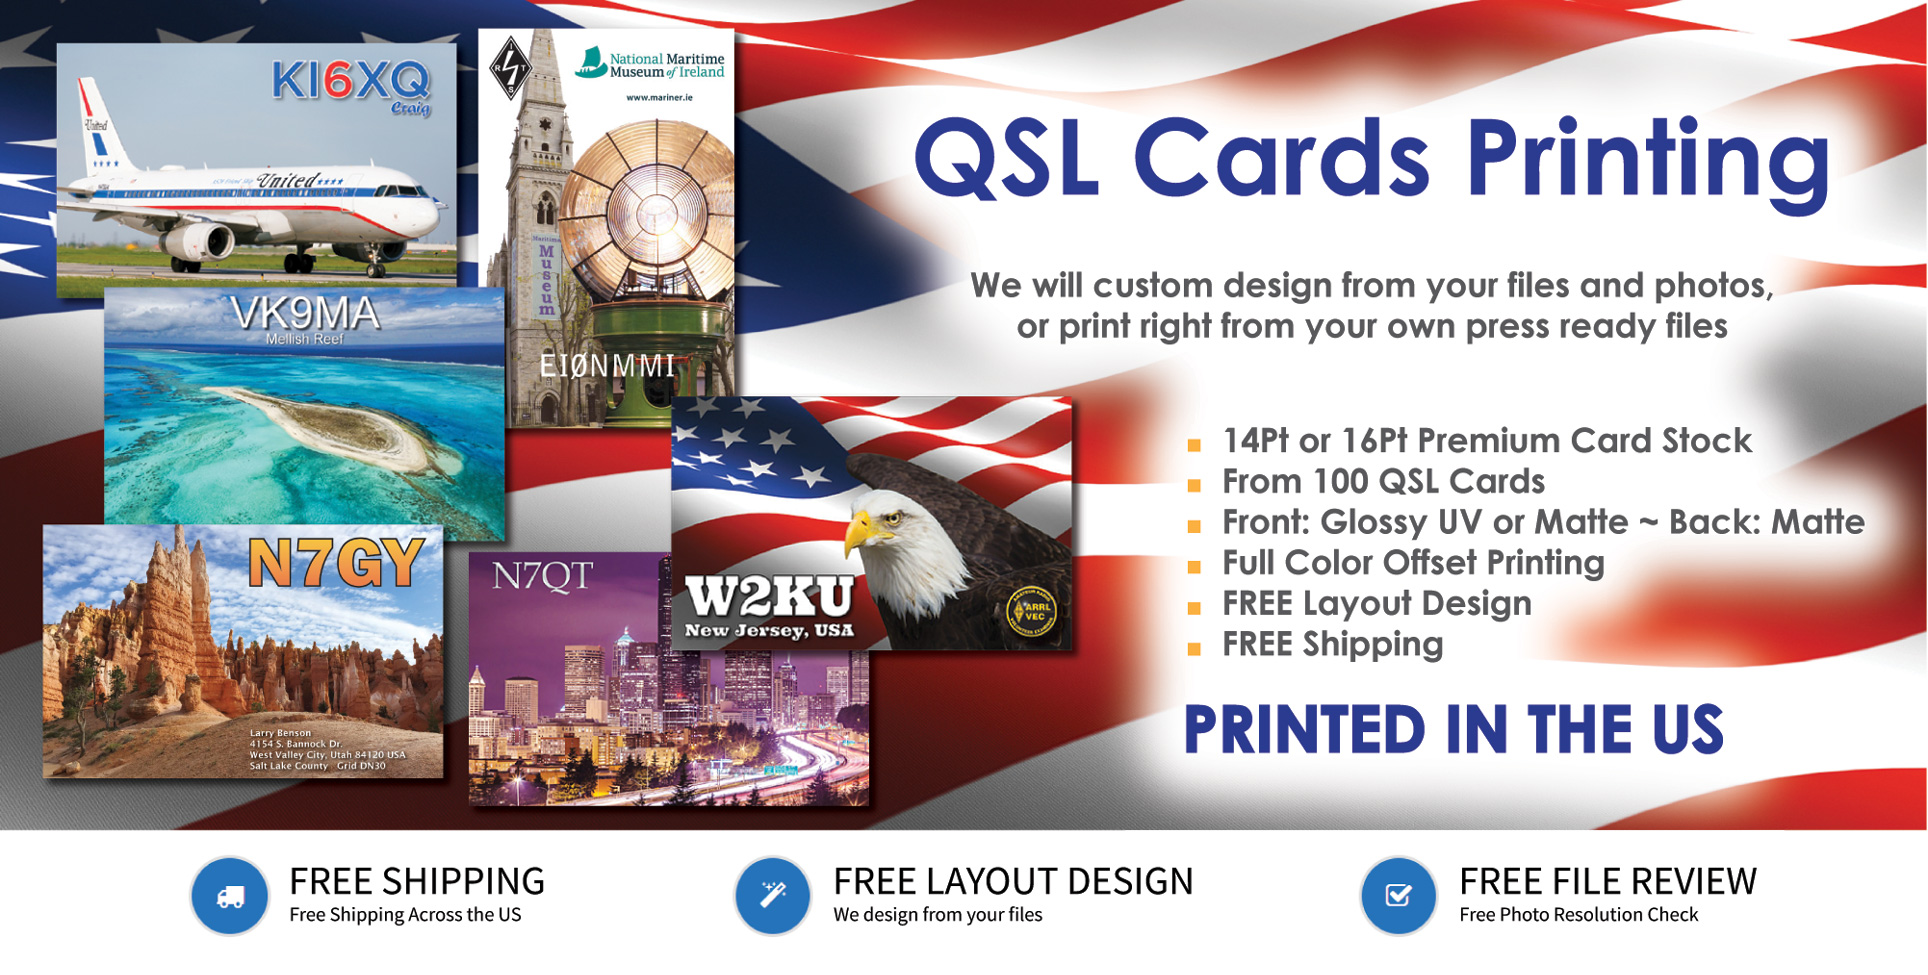 qsl cards printing